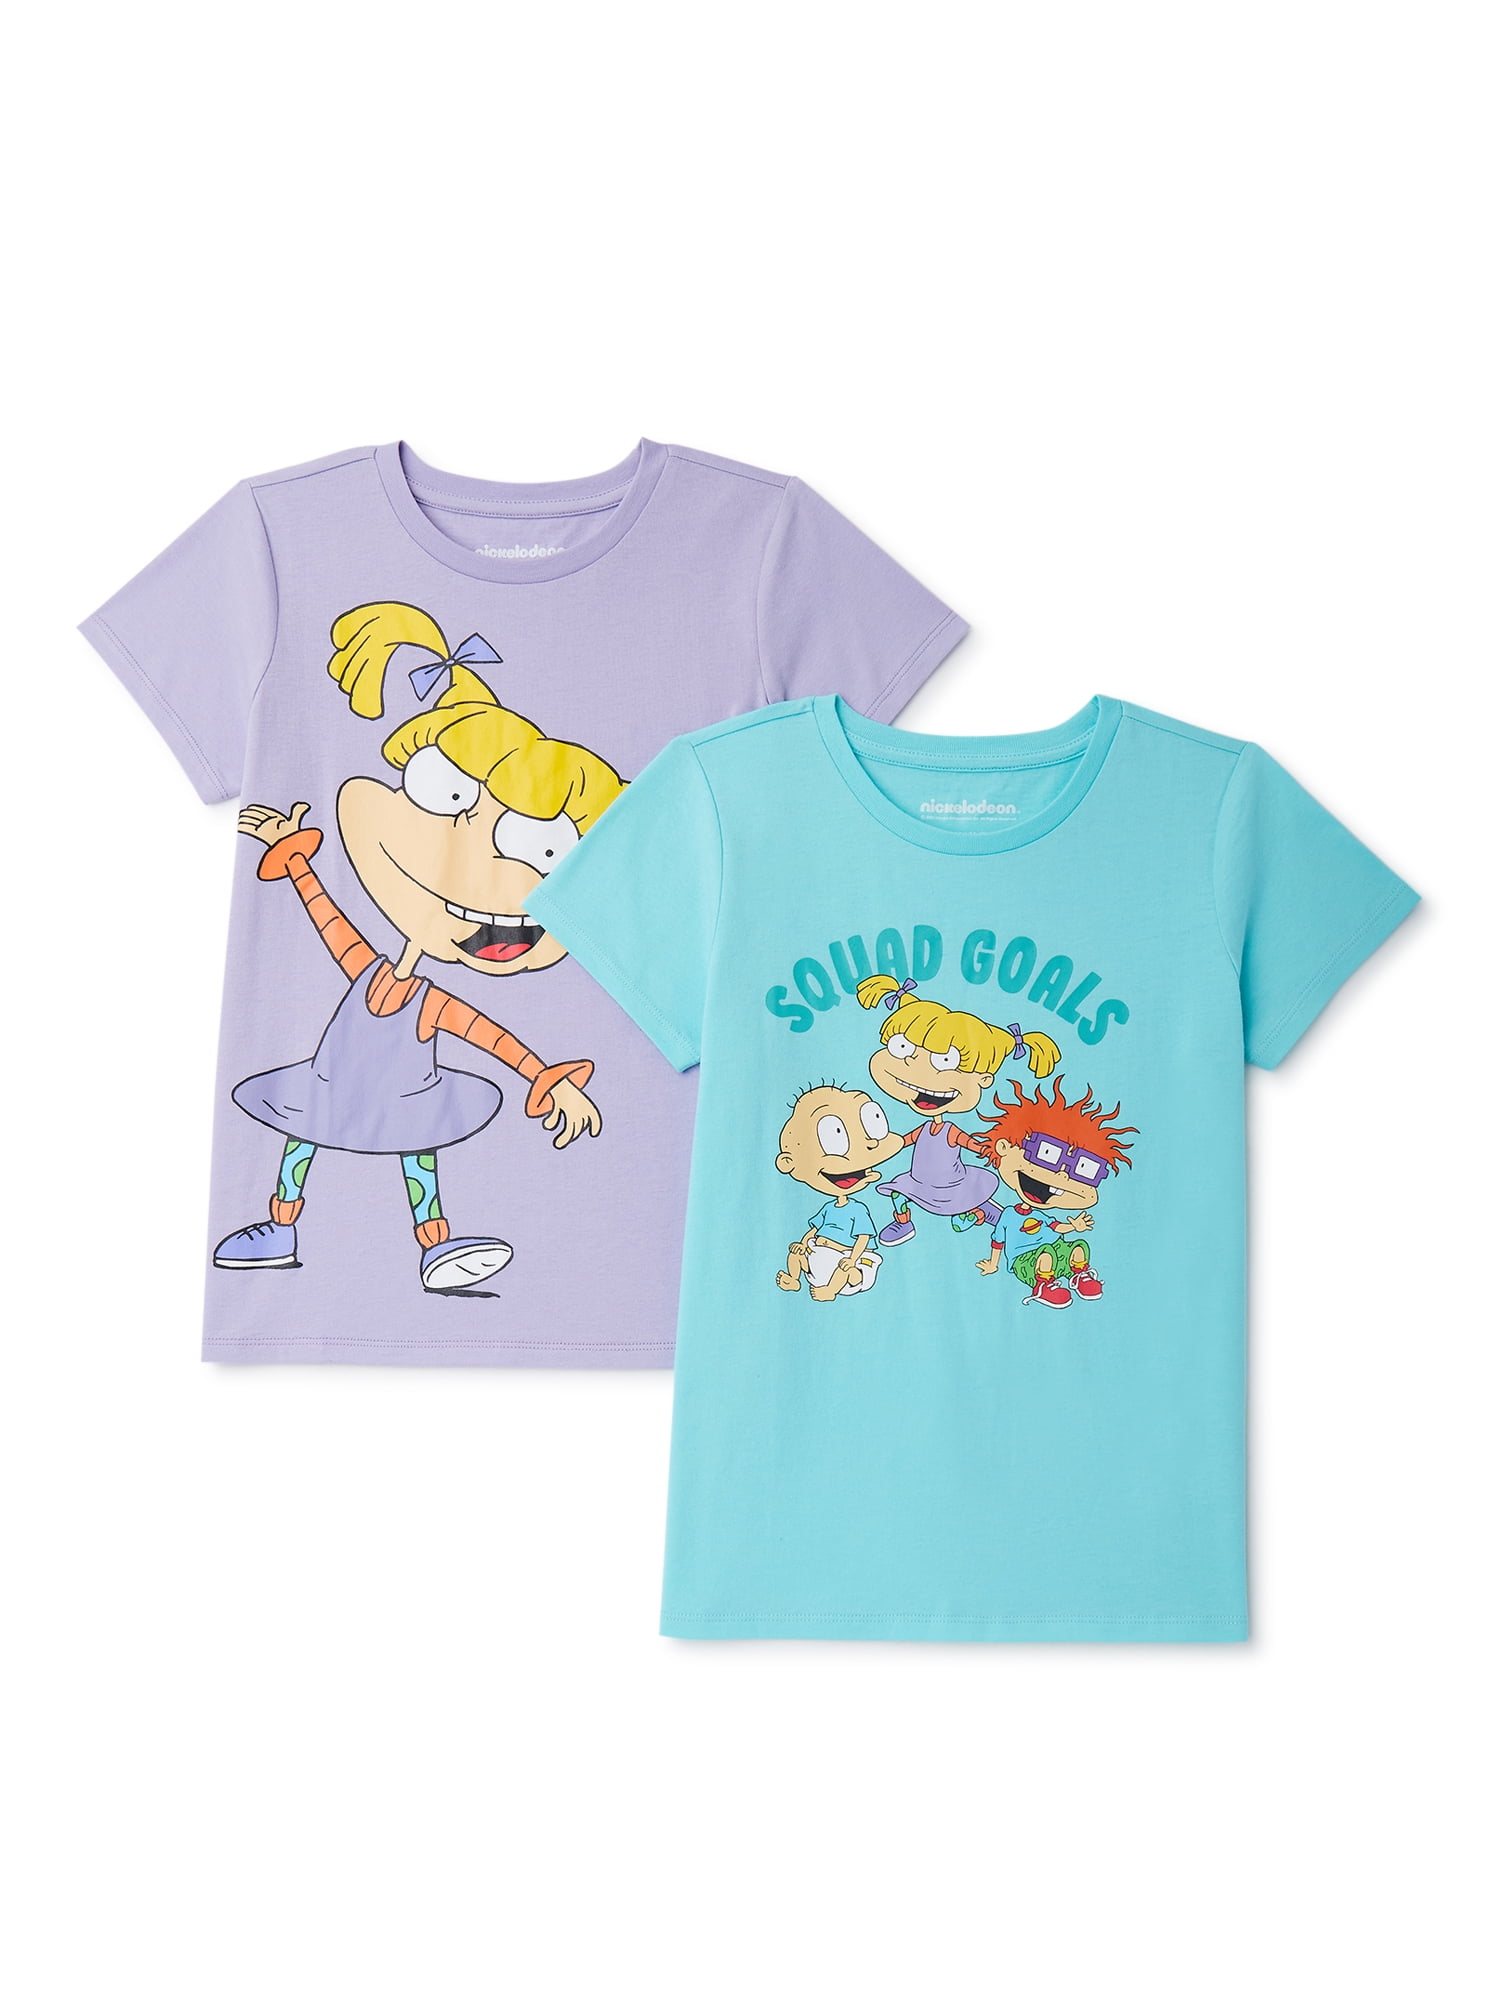 Nickelodeon Rugrats Girls Short Sleeve T-Shirts, 2-Pack, Sizes 4-16 ...